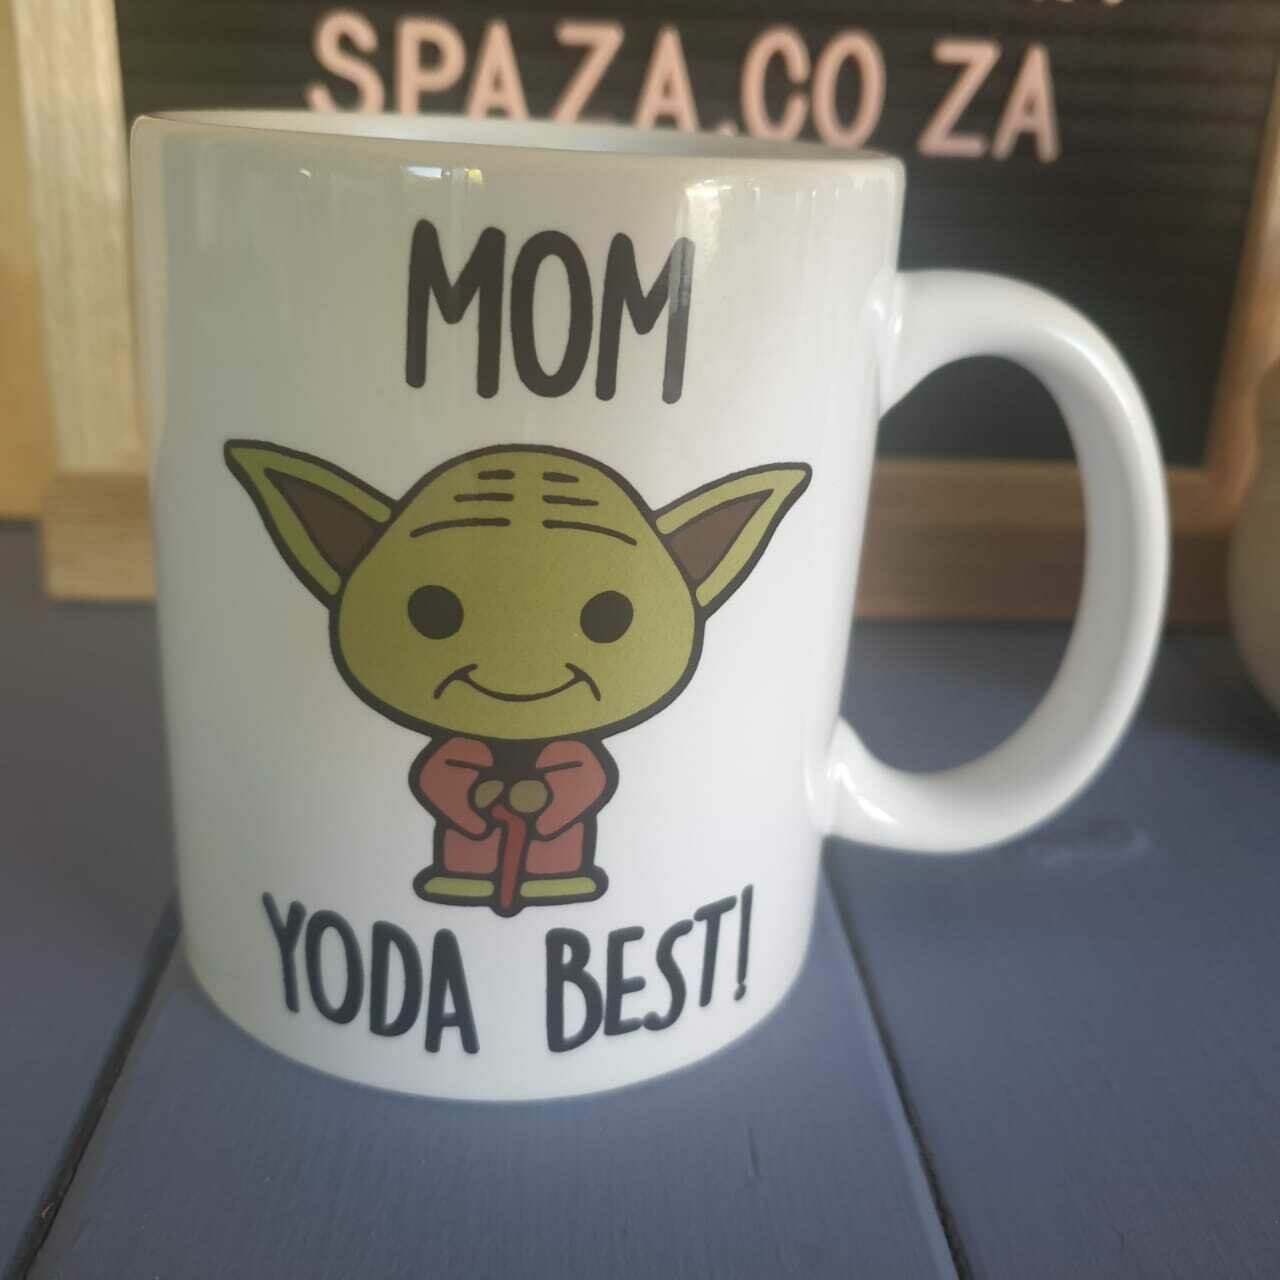 Mom Yoda Best Mug